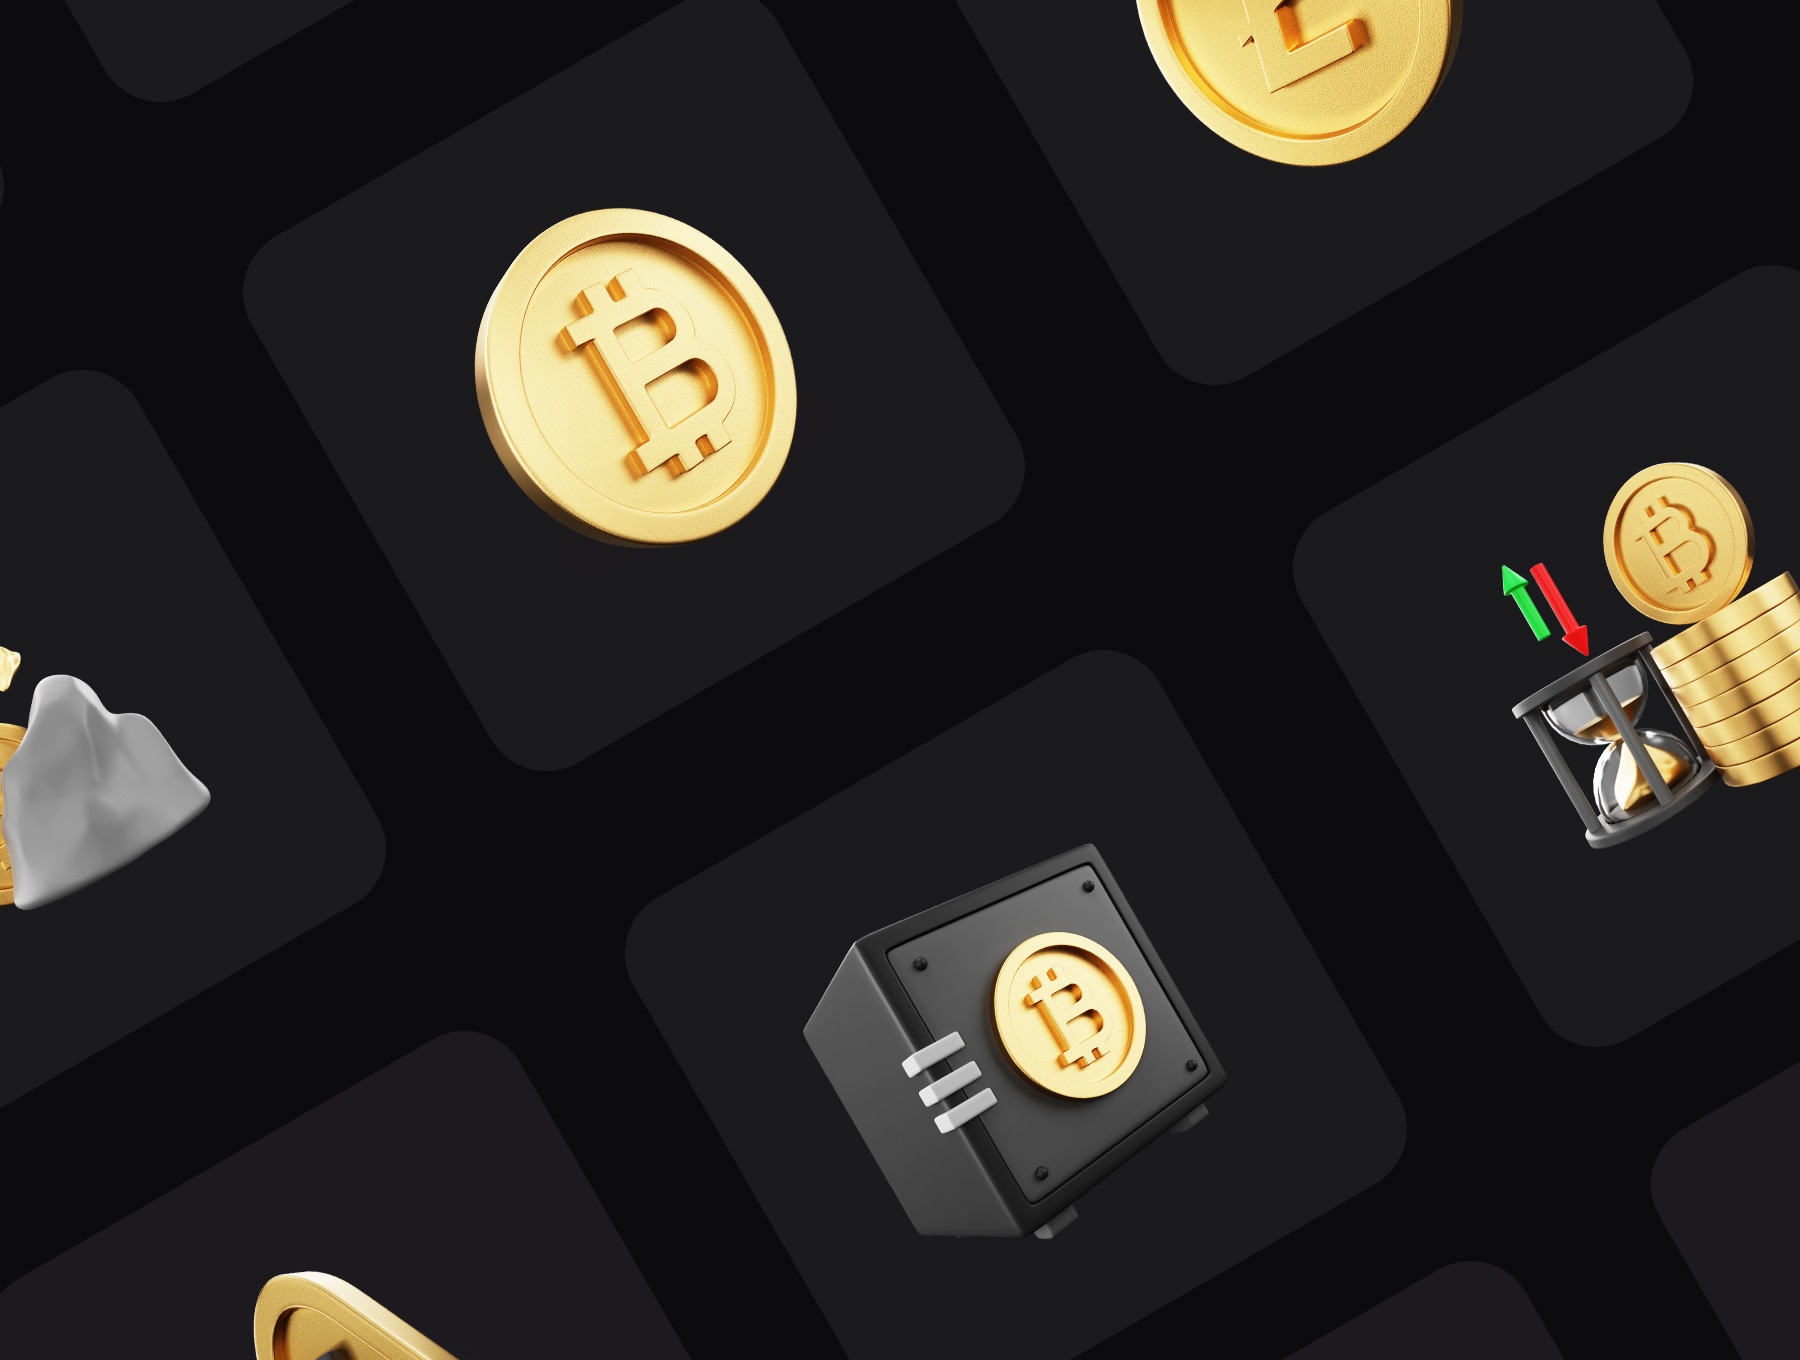 1235 250+非常有质感的金色加密货币3D图标素材包 BlackGold – Cryptocurrency 3D Icon Pack